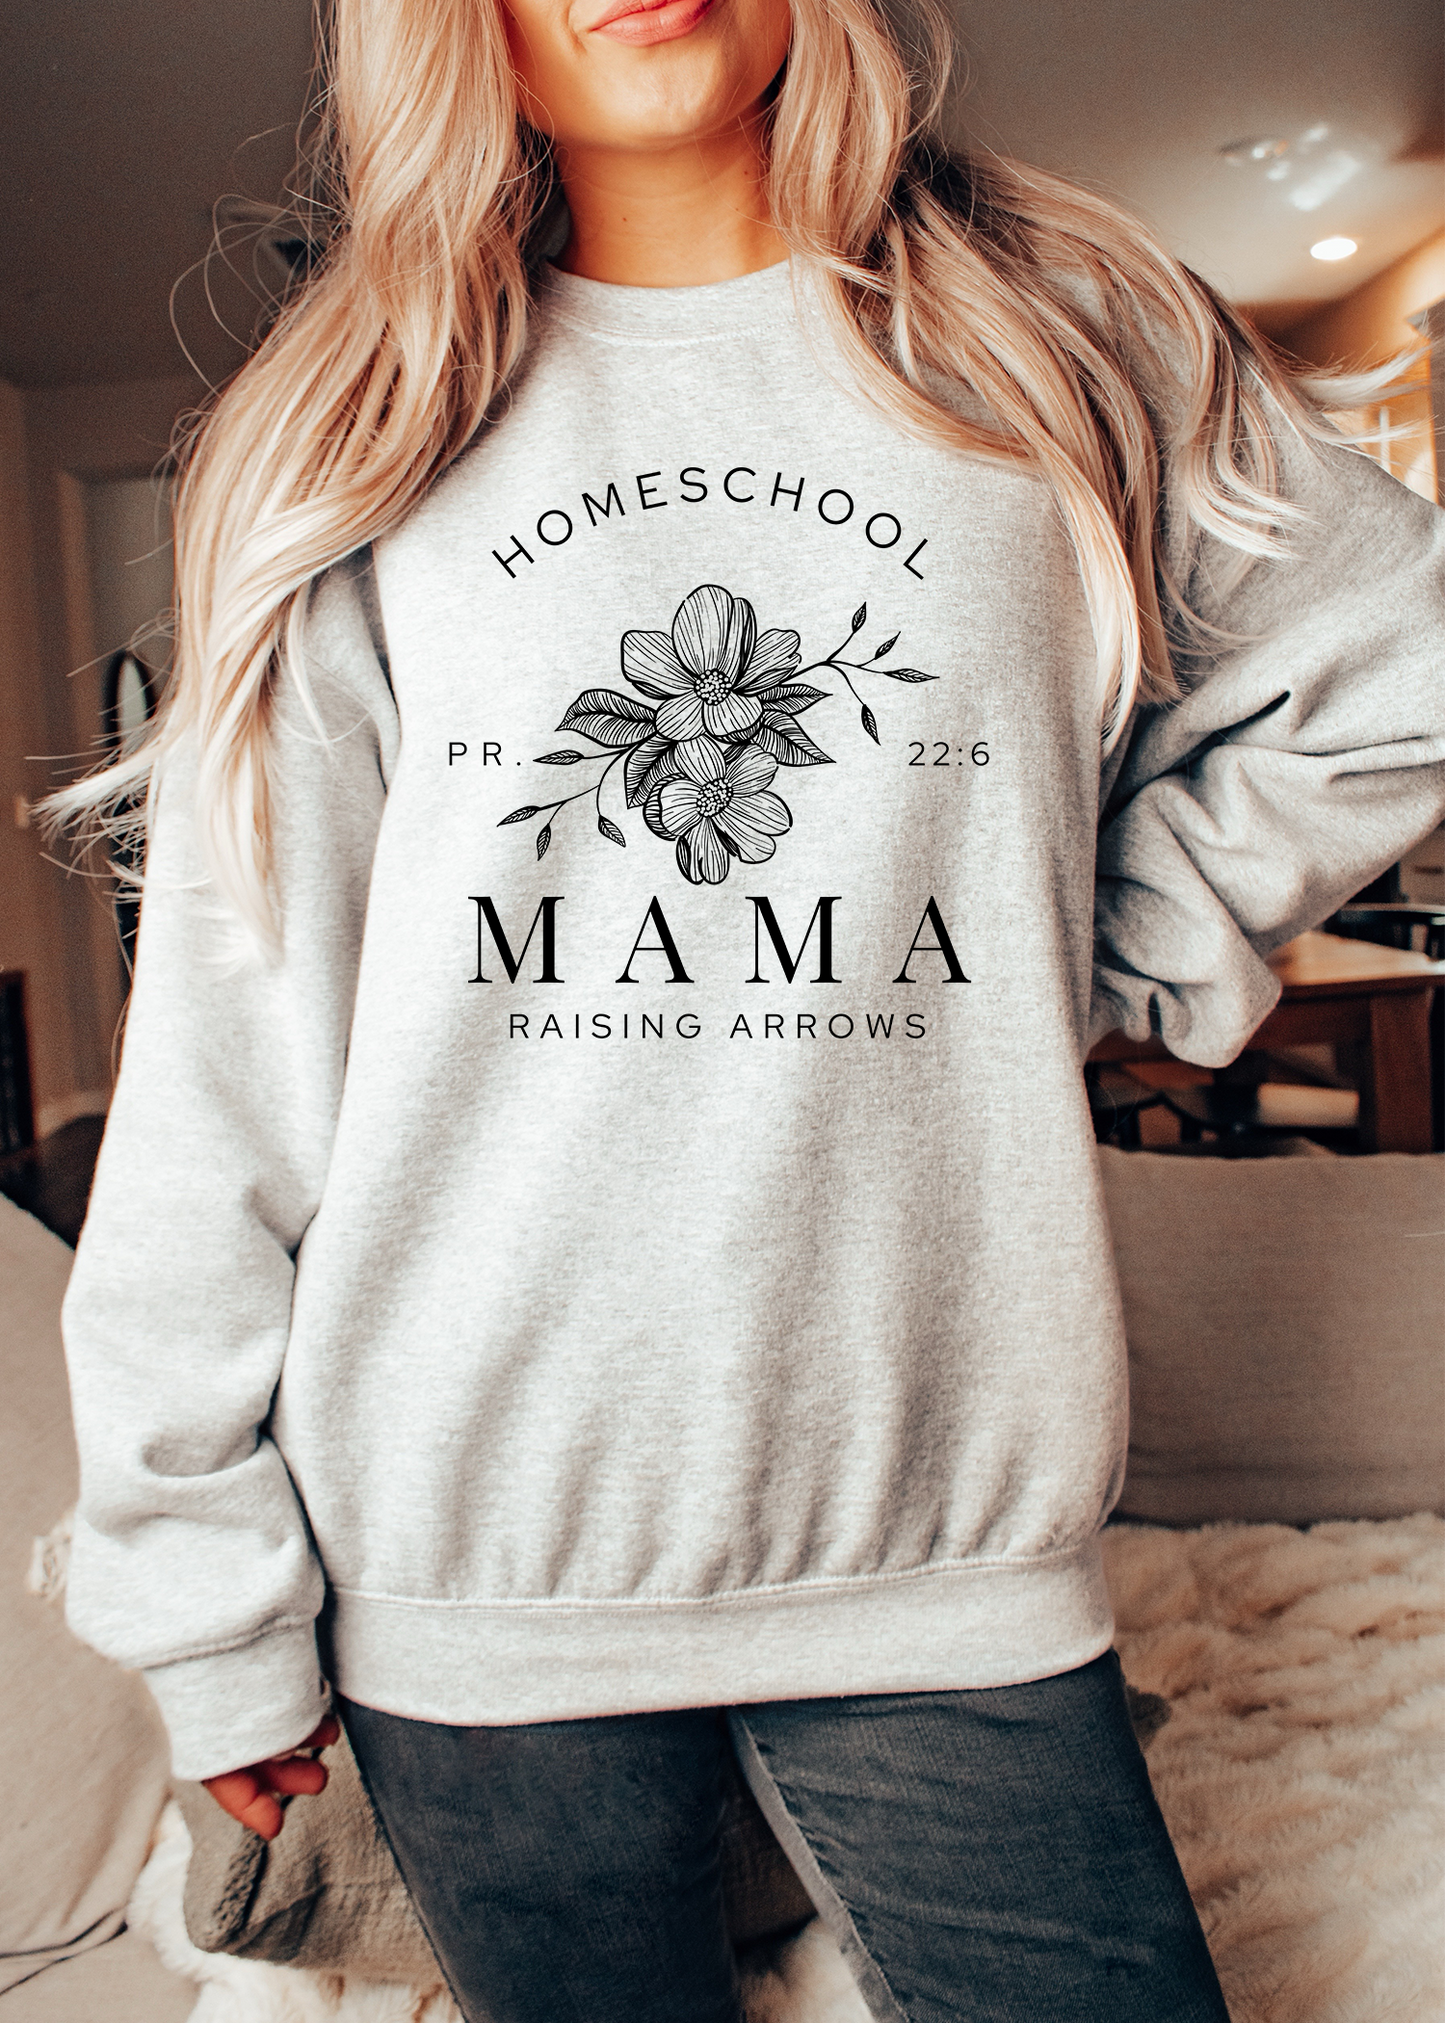 Homeschool Mama Raising Arrows Gildan Softstyle Sweatshirt or T-shirt